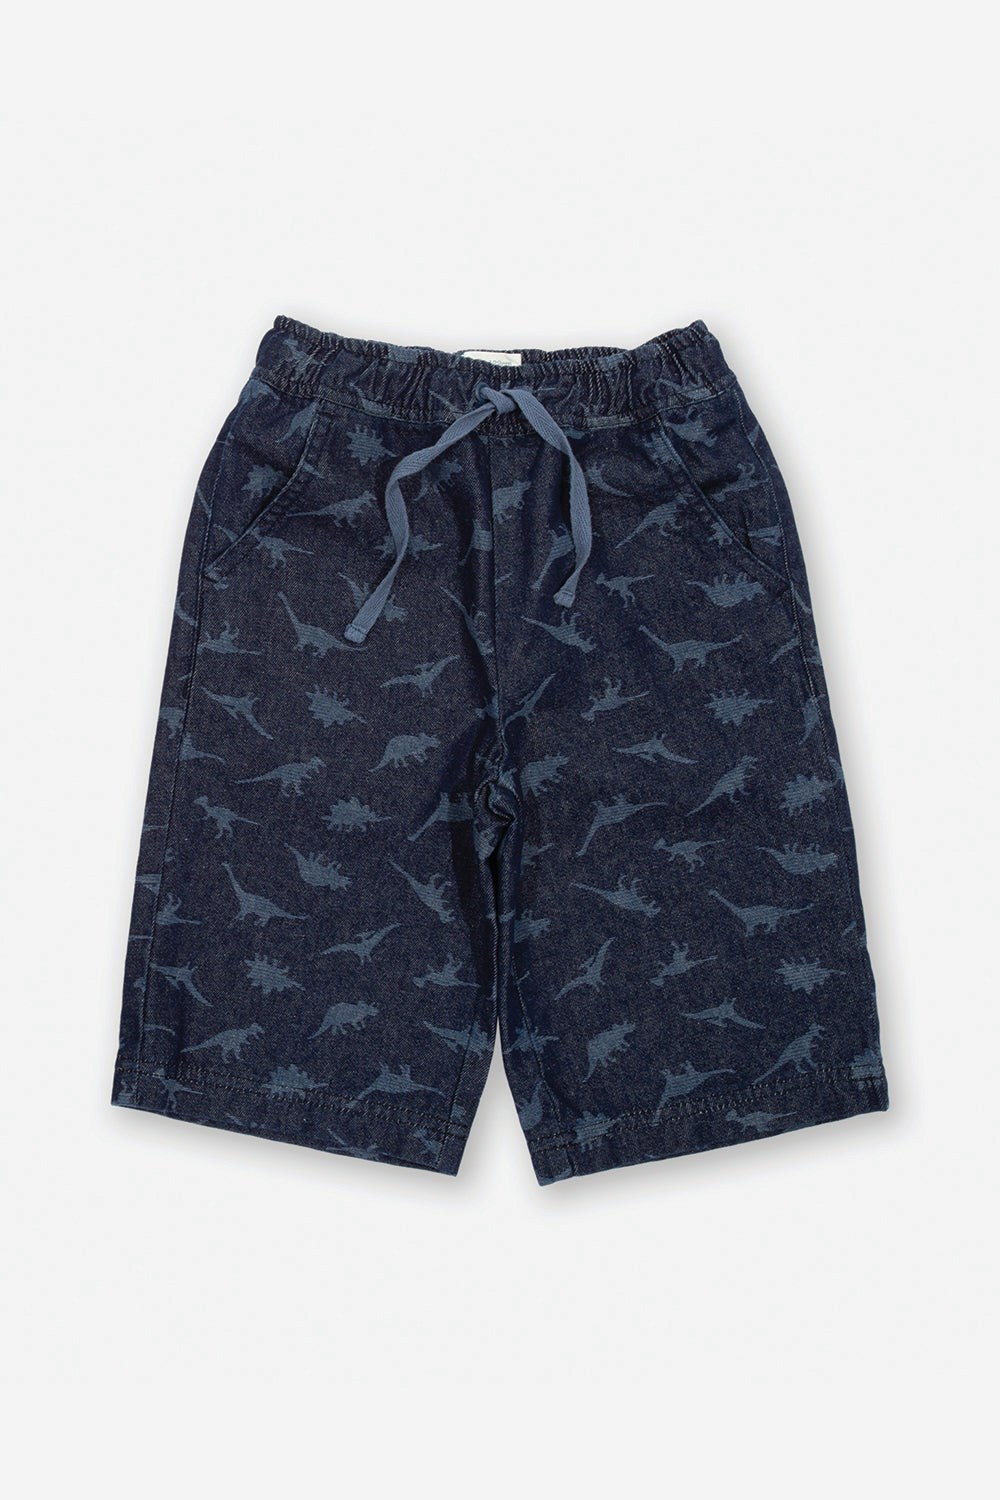 Dino Baby/Kids Denim Shorts -